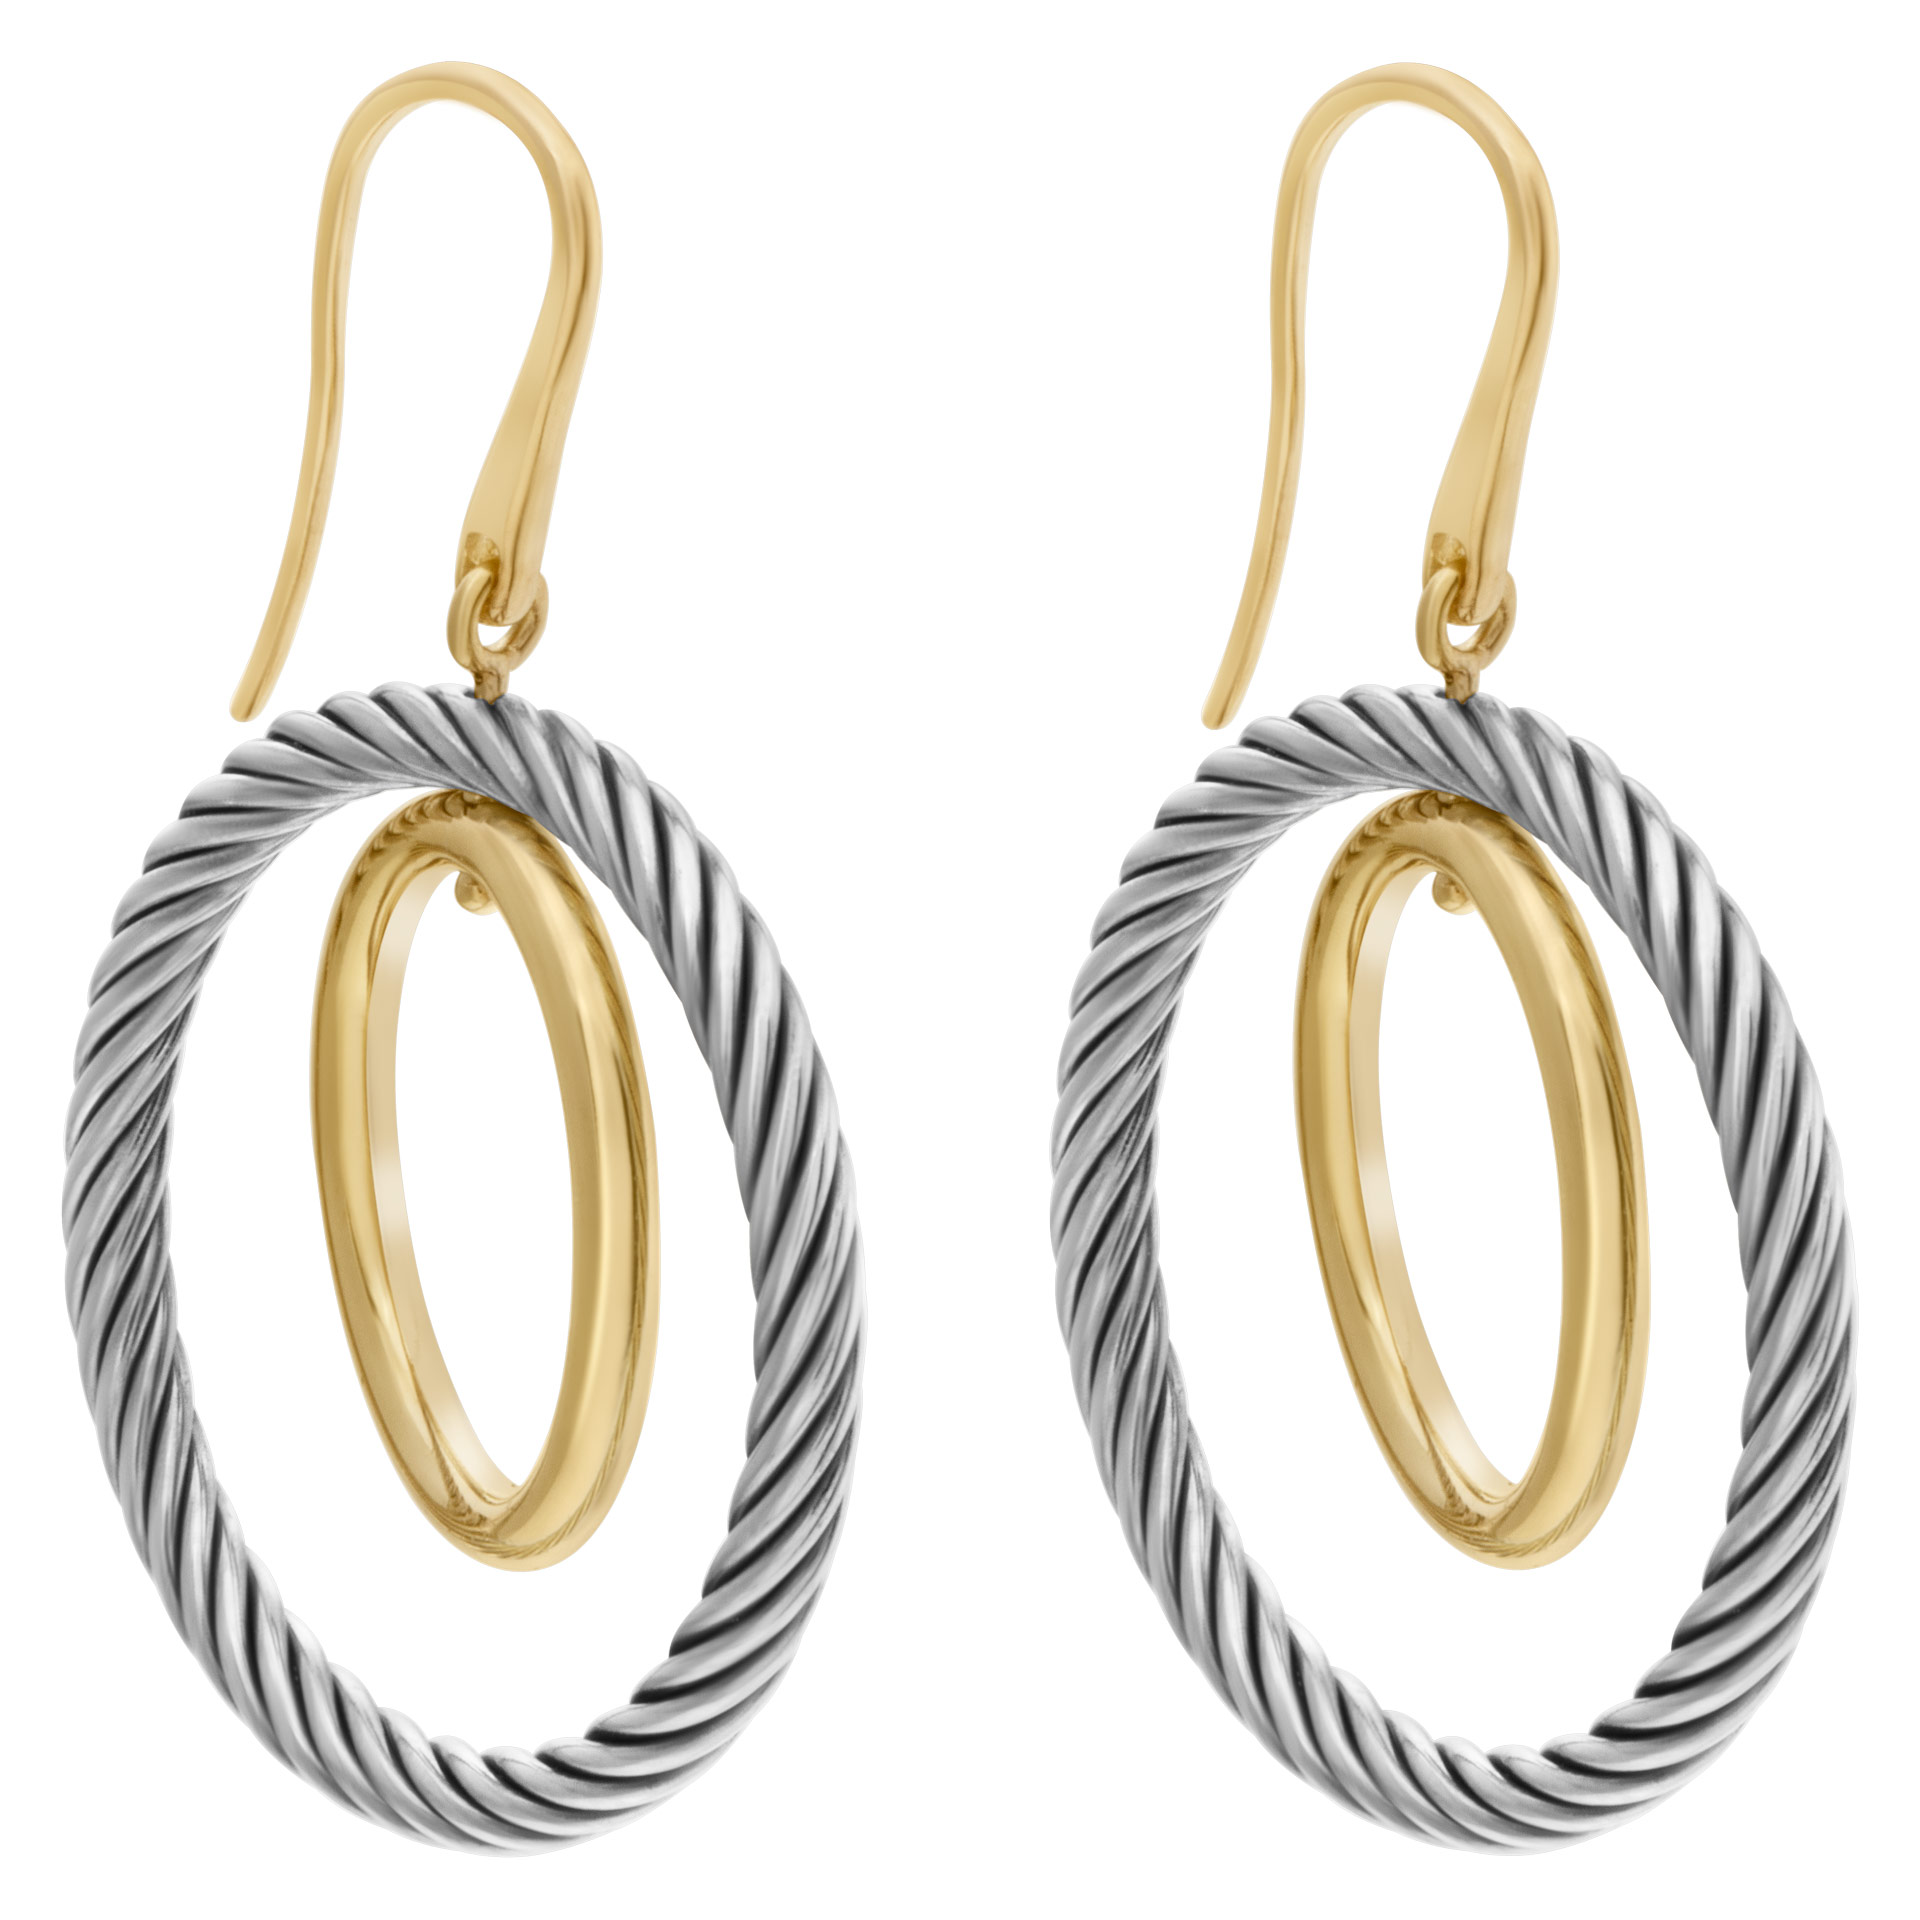 David Yurman Mobile Hoop earrings in 18k and sterling silver | eBay